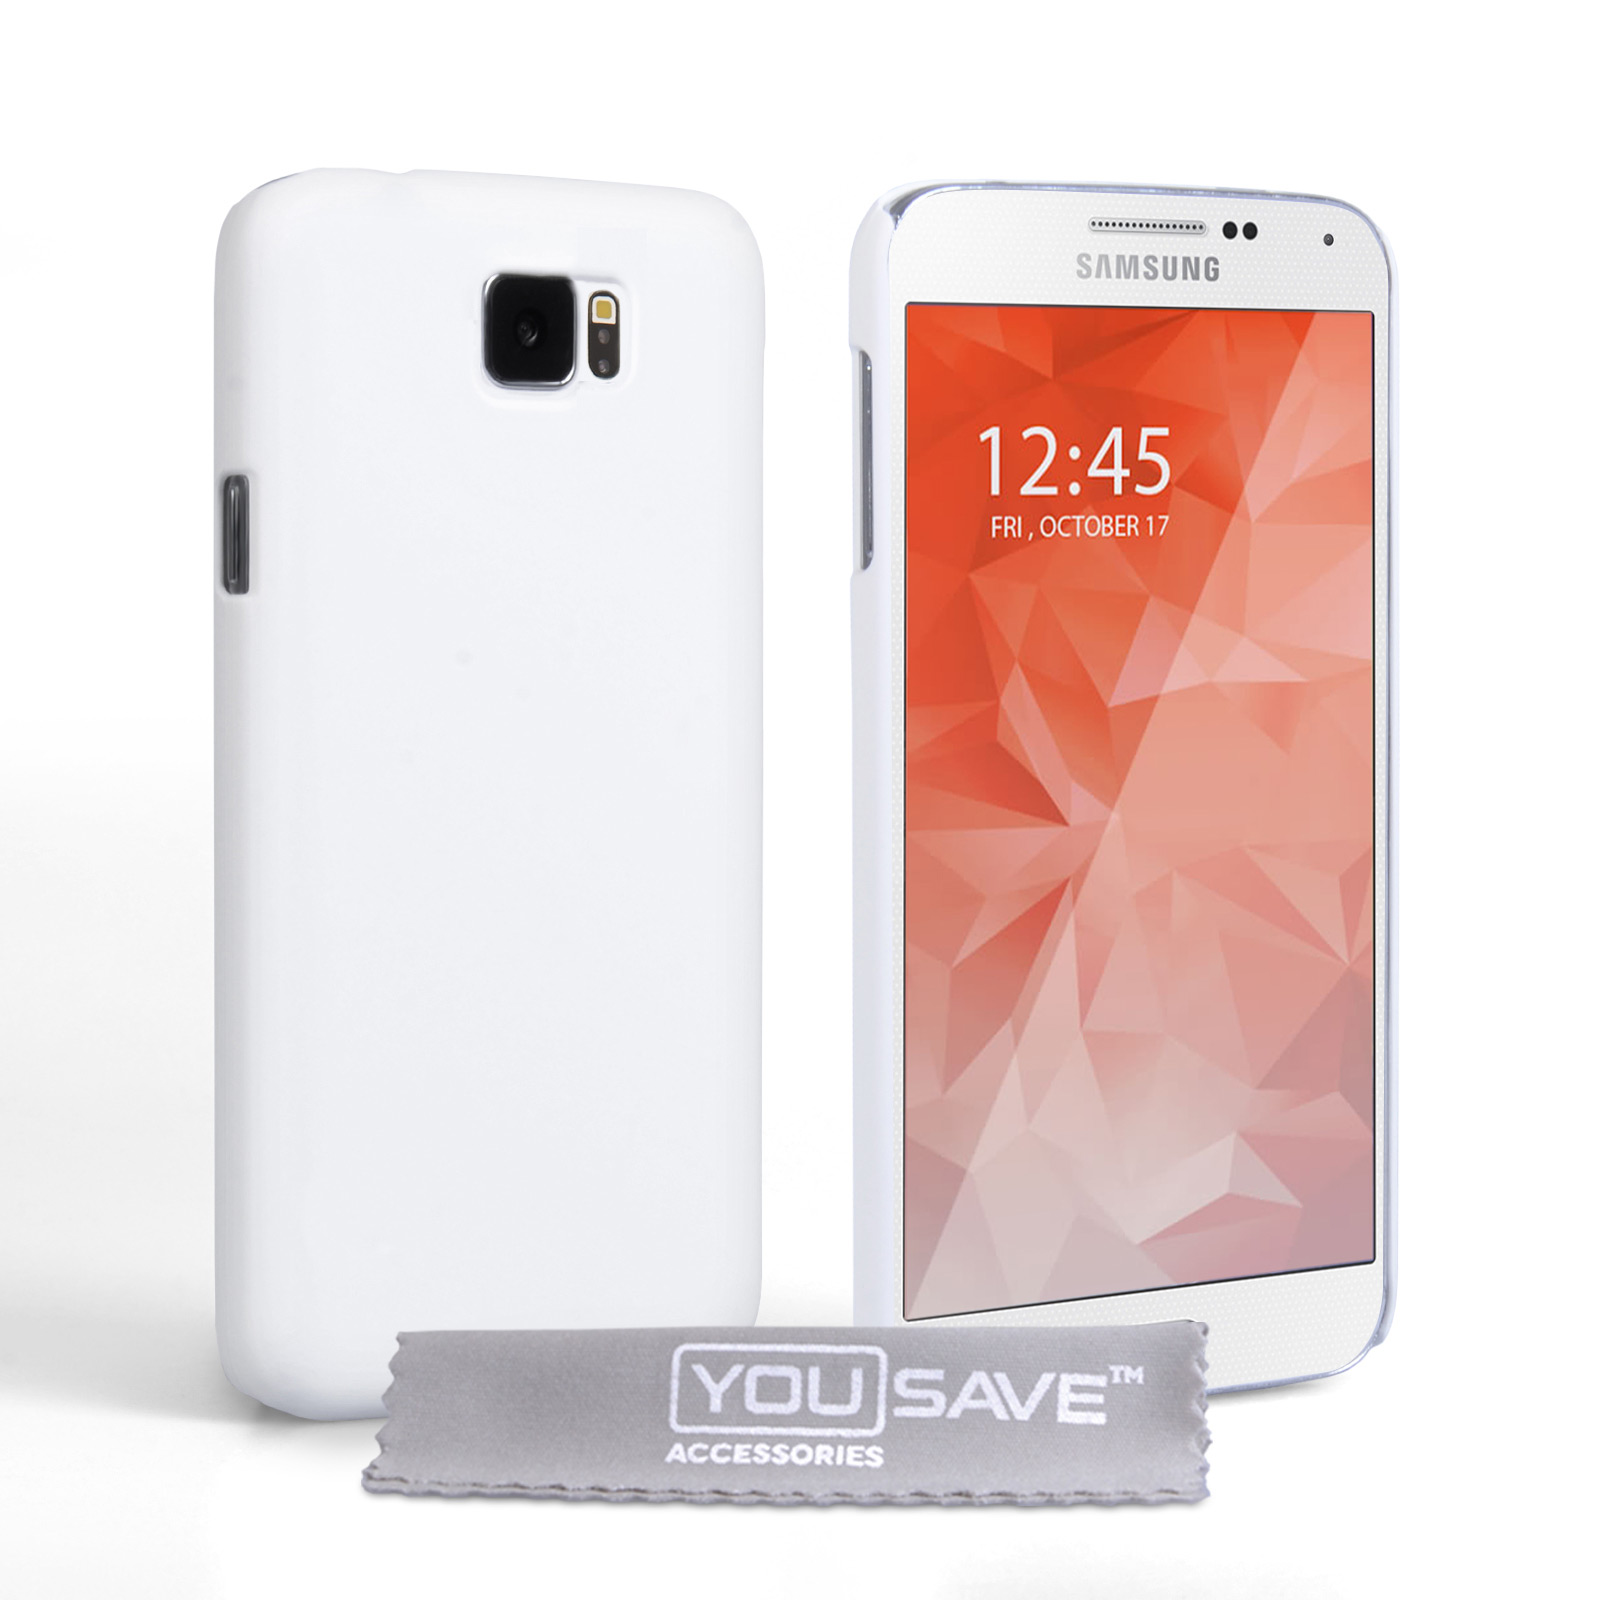 YouSave Accessories Samsung Galaxy S6 Hard Hybrid Case - White